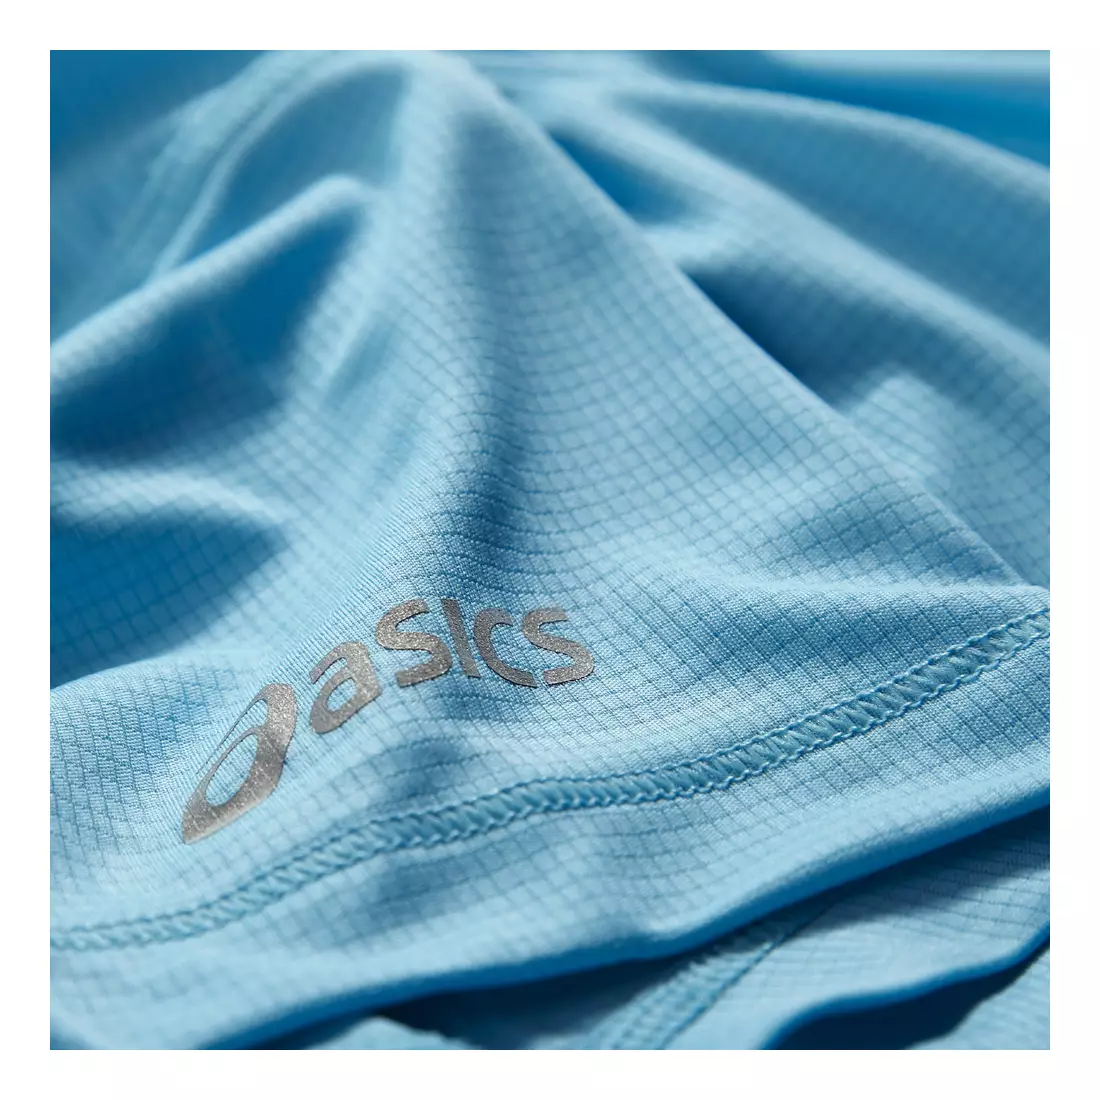 ASICS 110423-0877 GRAPHIC SS TOP - women's running T-shirt, color: Blue